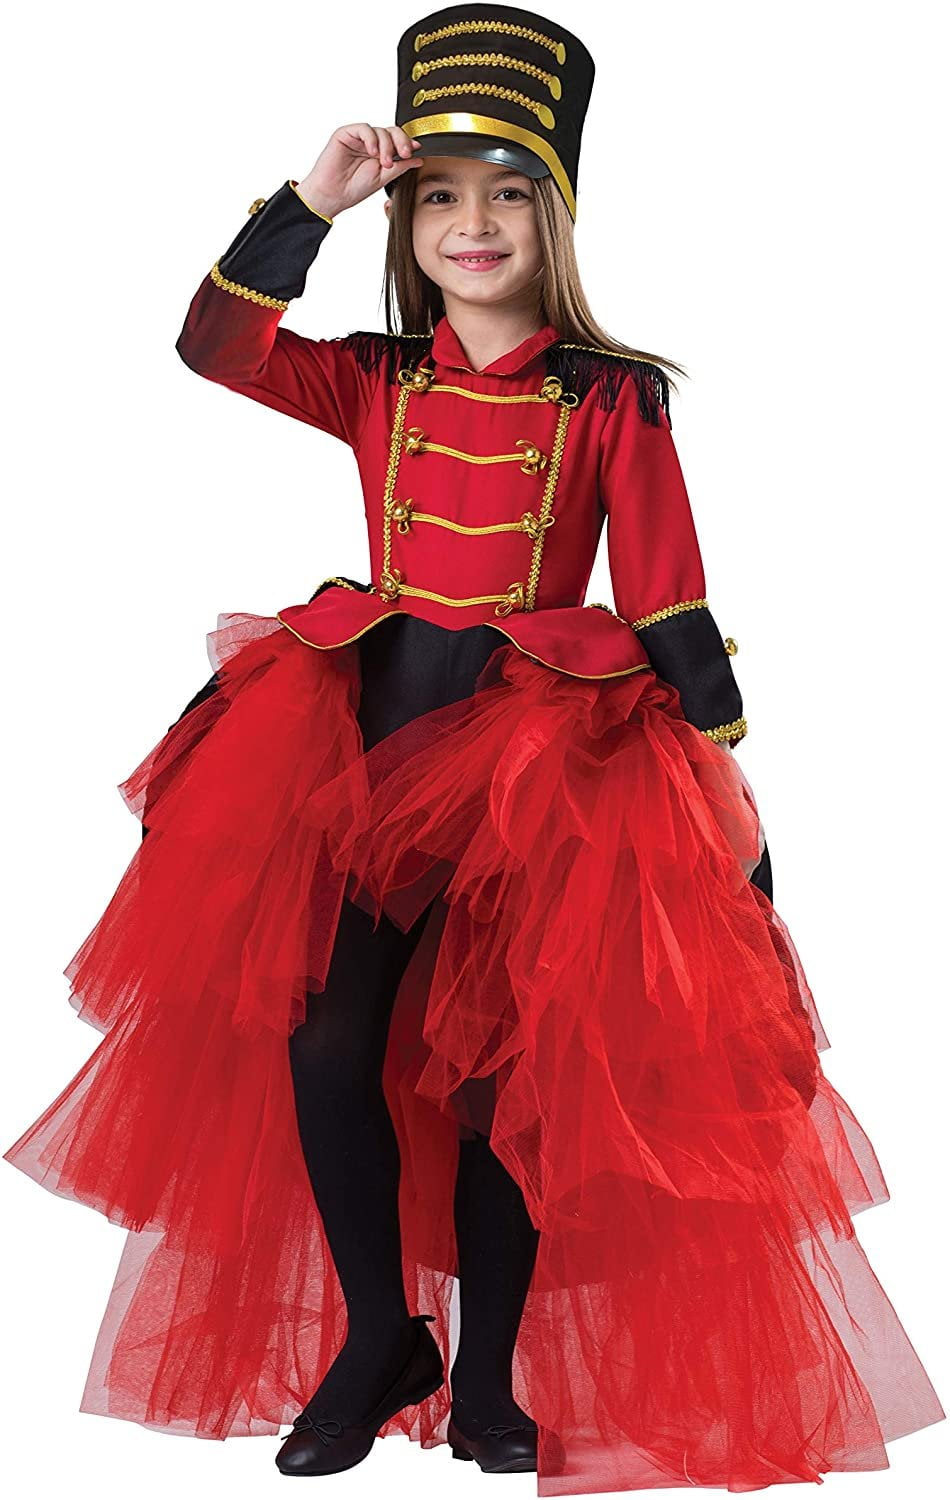 Dress-Up-America Band Majorette Costume Toy Soldier Uniform Dress Up for Kids Nutcracker Costume for Girls 